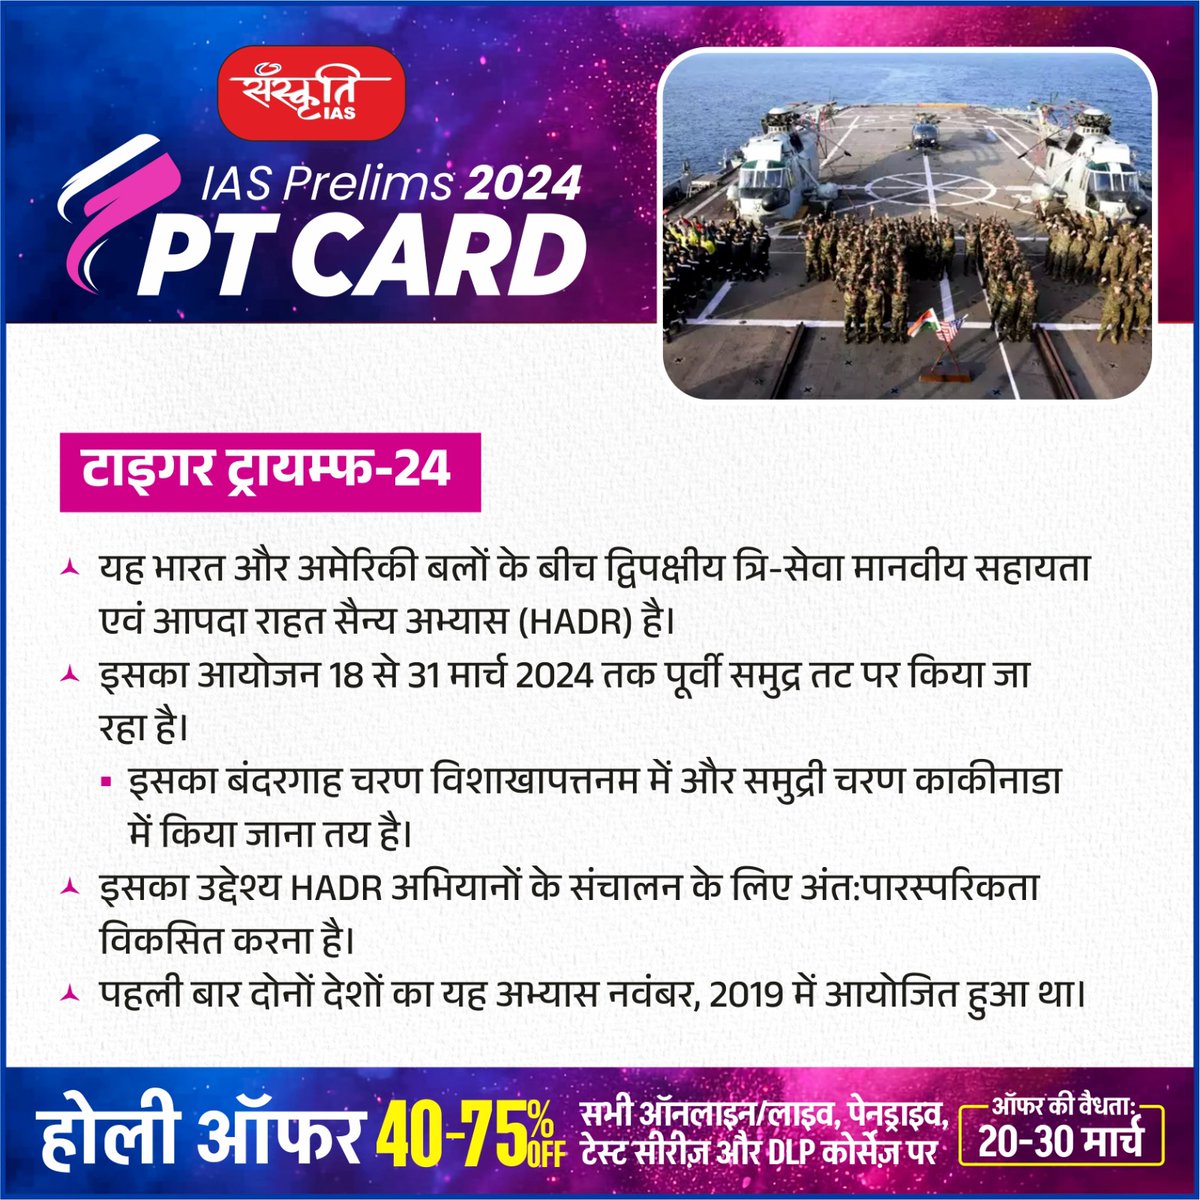 #PT_Card 

टाइगर ट्रायम्फ-24

sanskritiias.com/hindi/pt-cards…

@sanskritiias 

#TigerTriumph24 #UPSC #CivilServices #Prelims #SanskritiIAS #CurrentAffairs